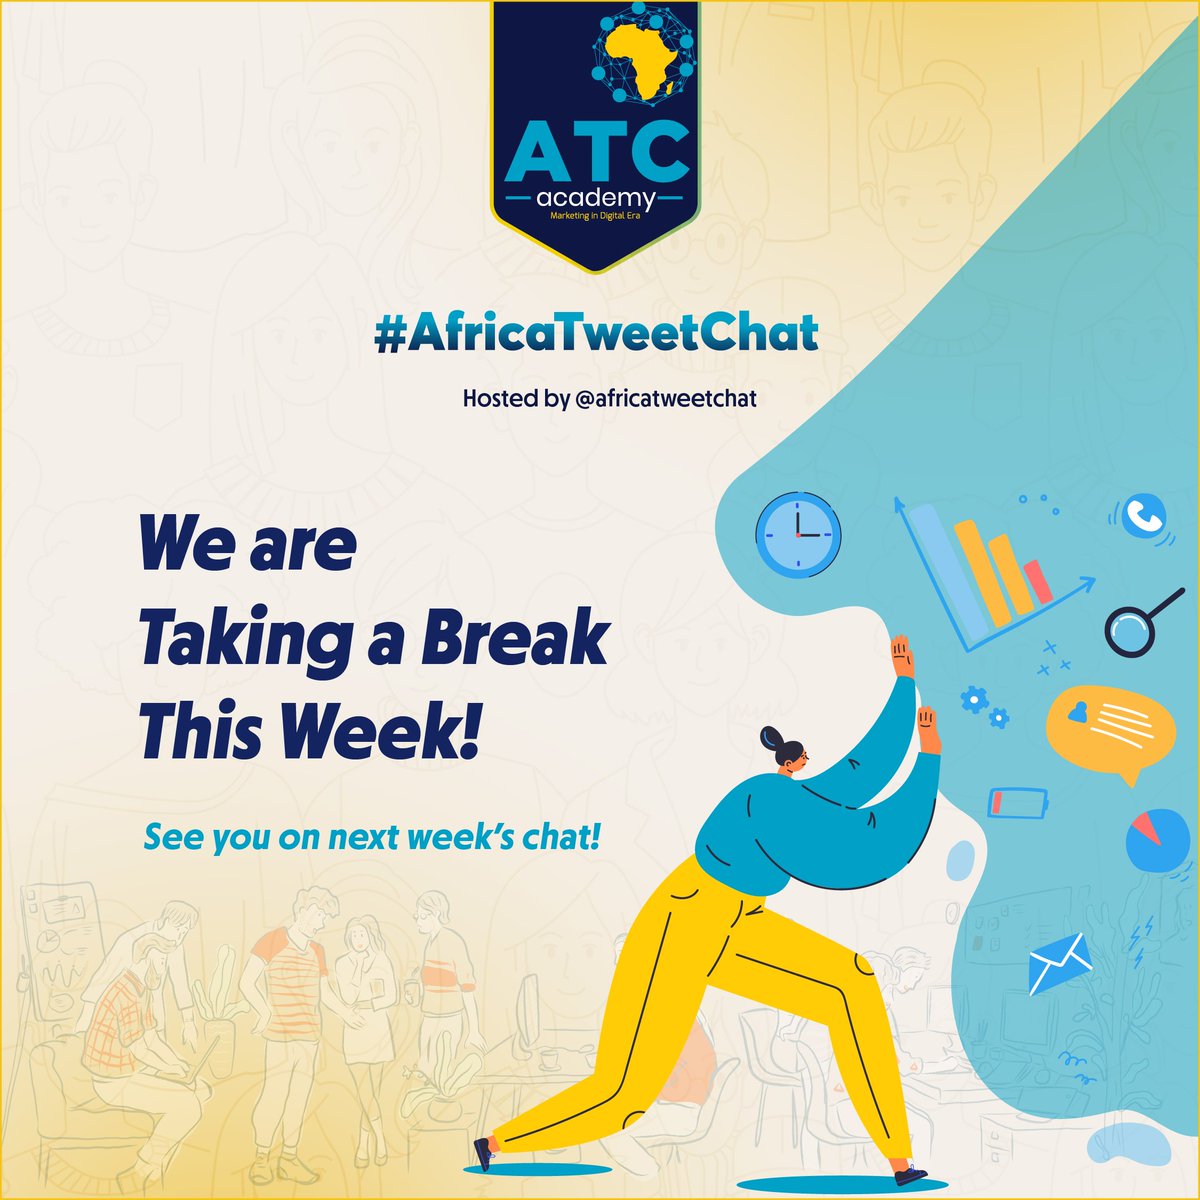 Hey ☺️.
We're taking a break tonight. See you next week 🫶
#AfricaTweetChat